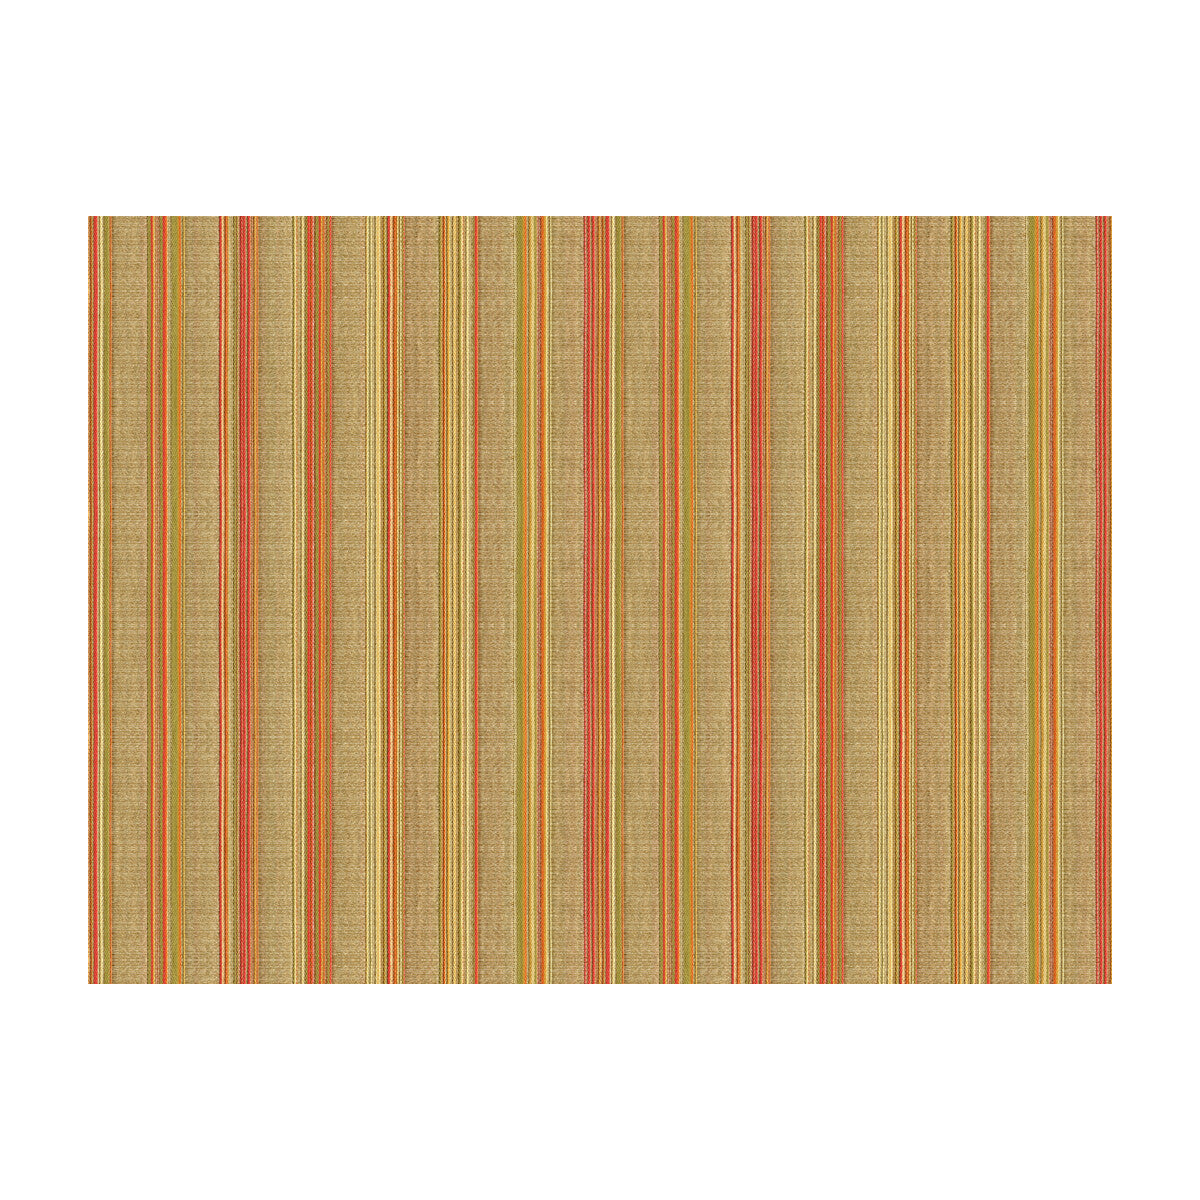 Kravet Smart fabric in 33574-716 color - pattern 33574.716.0 - by Kravet Smart